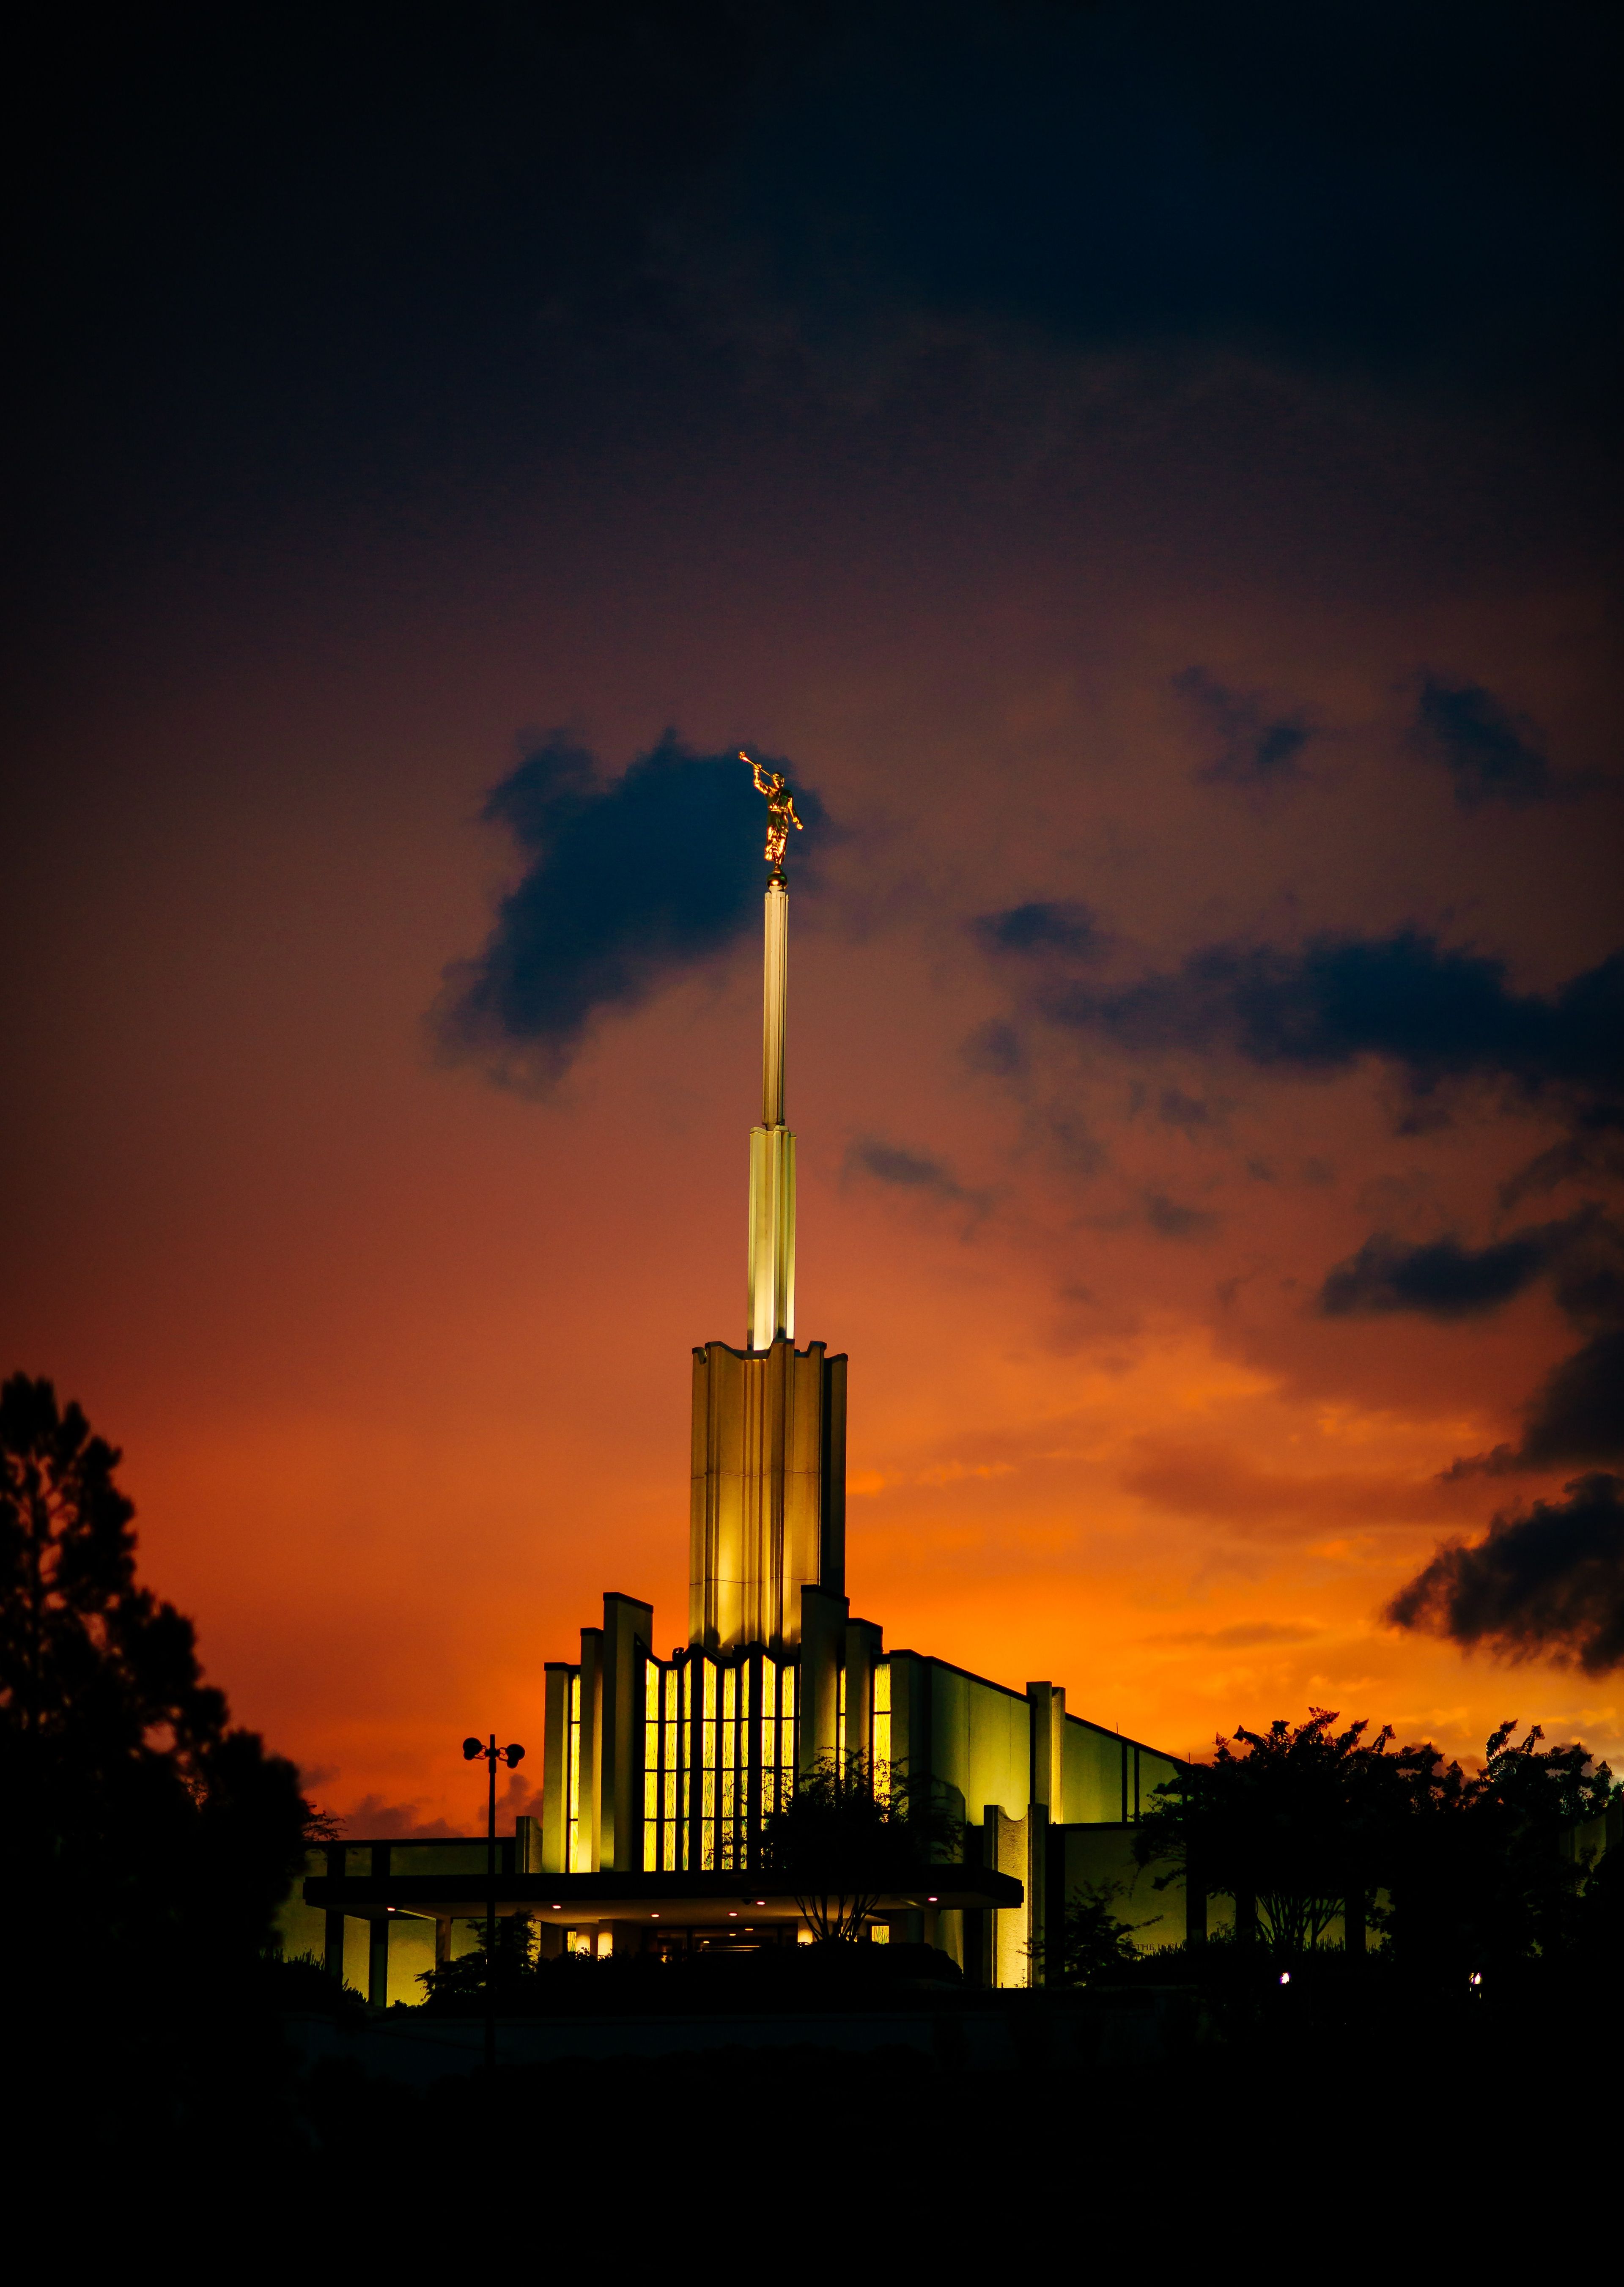 The Atlanta Georgia Temple is lit up at night.